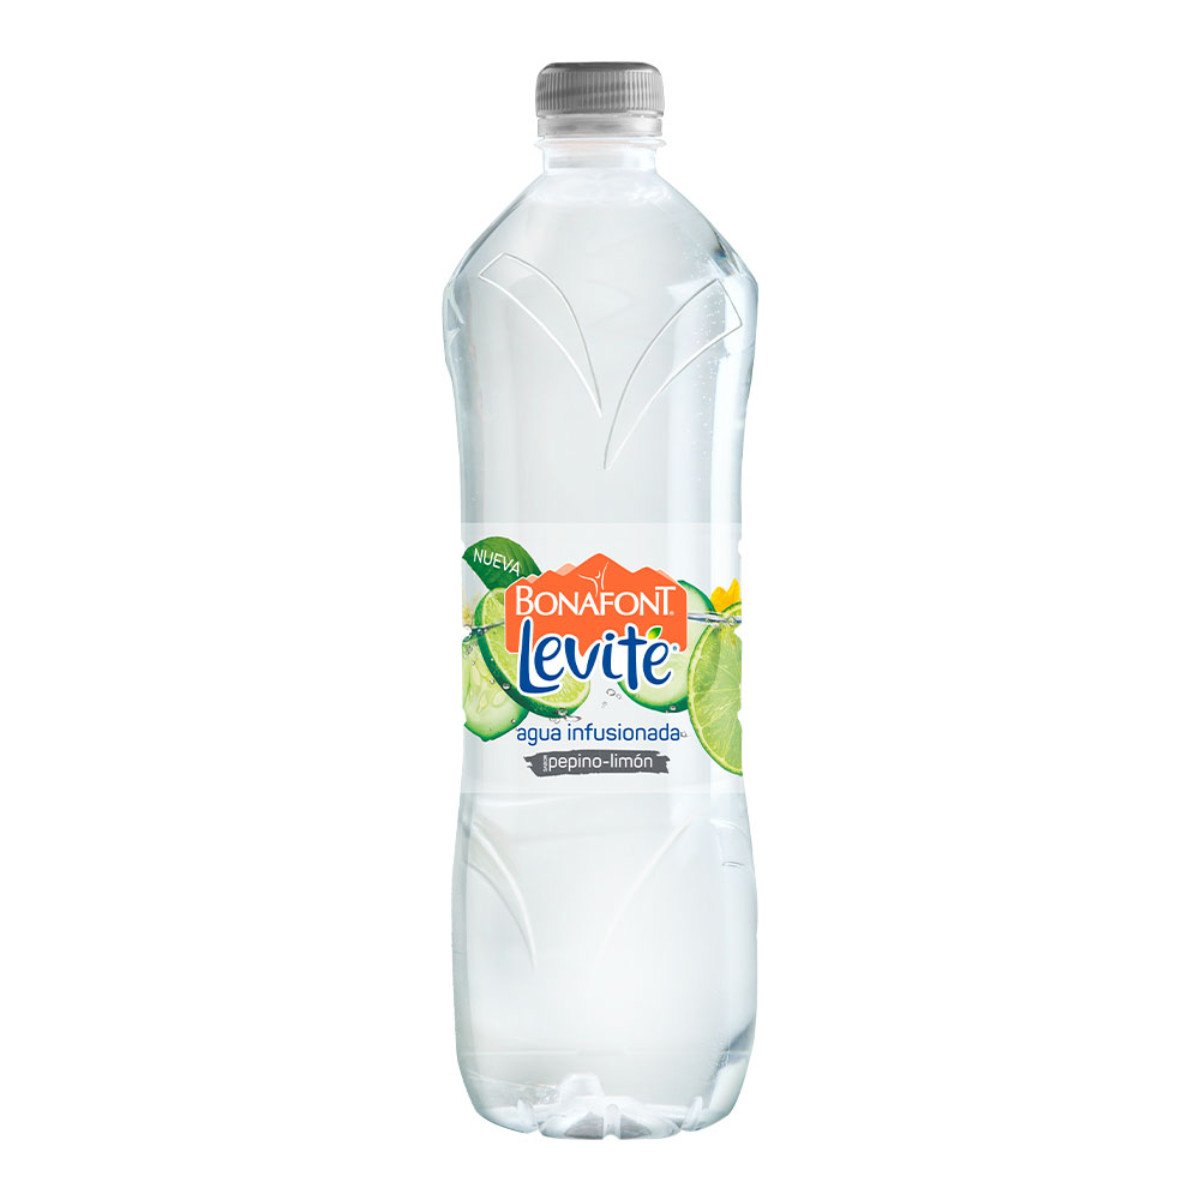 Agua mineral natural Dia botella 1.5 l - Supermercados DIA